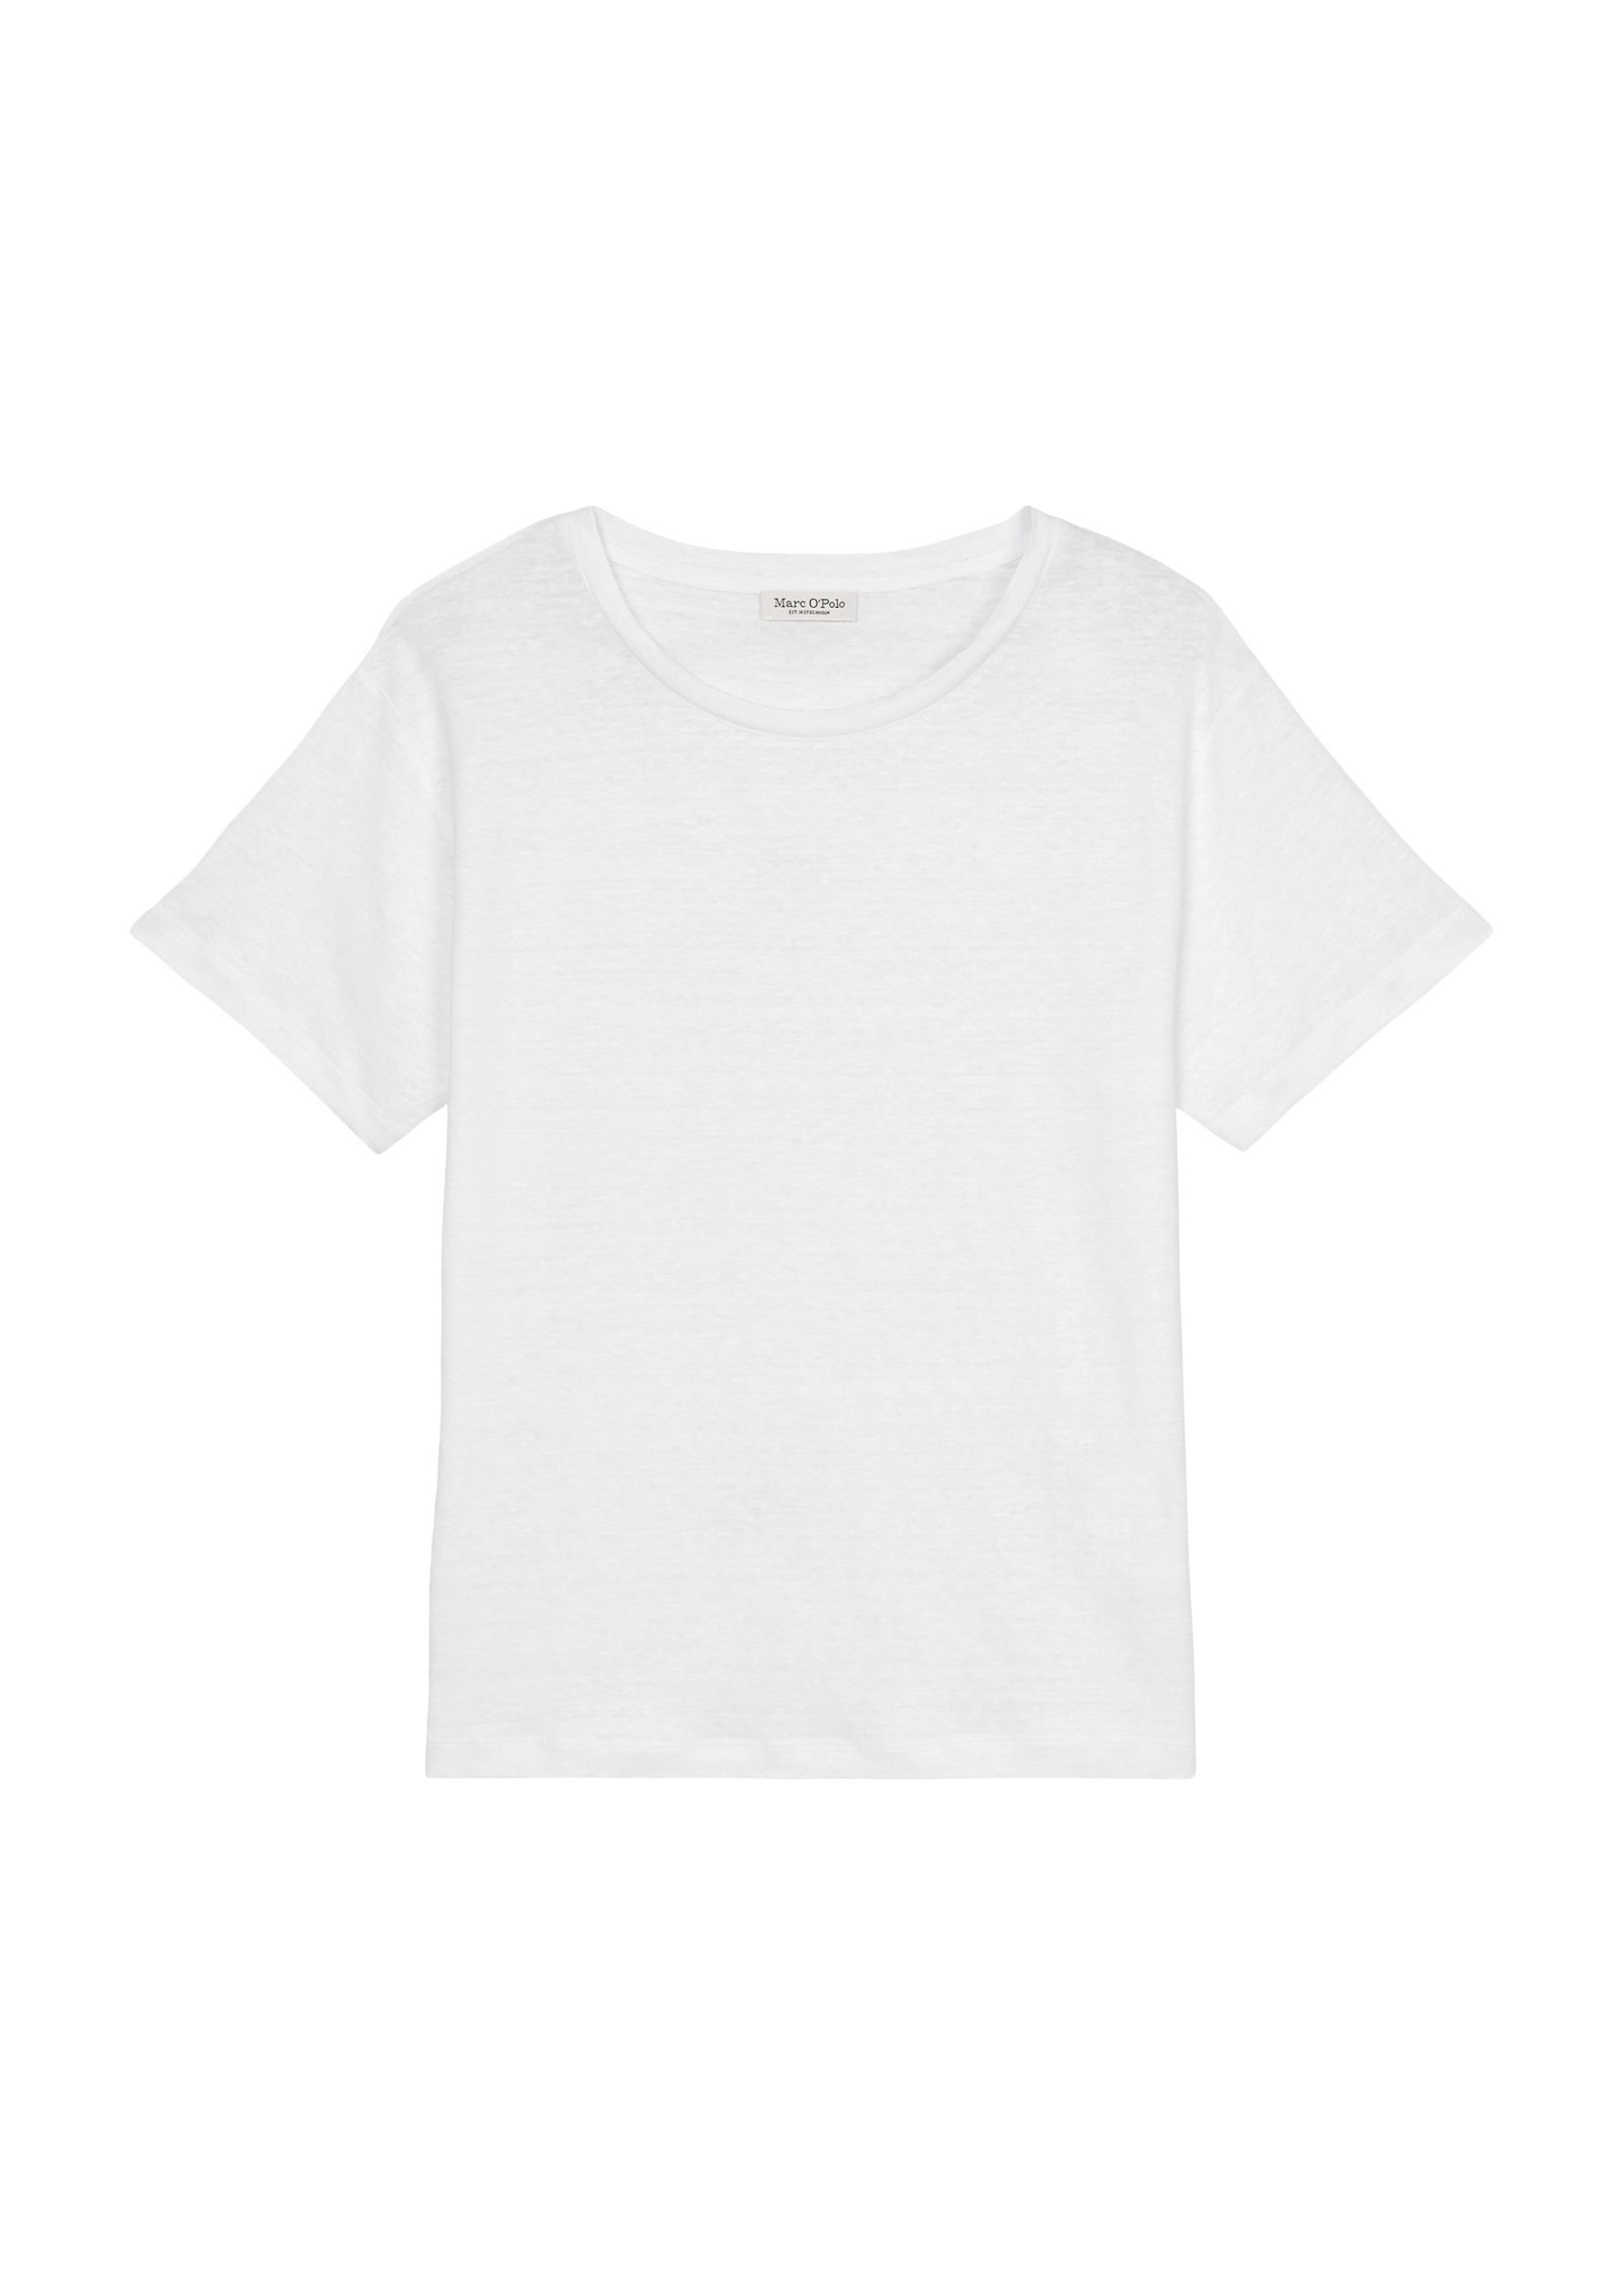 Damen T-Shirt aus weißen Leinen